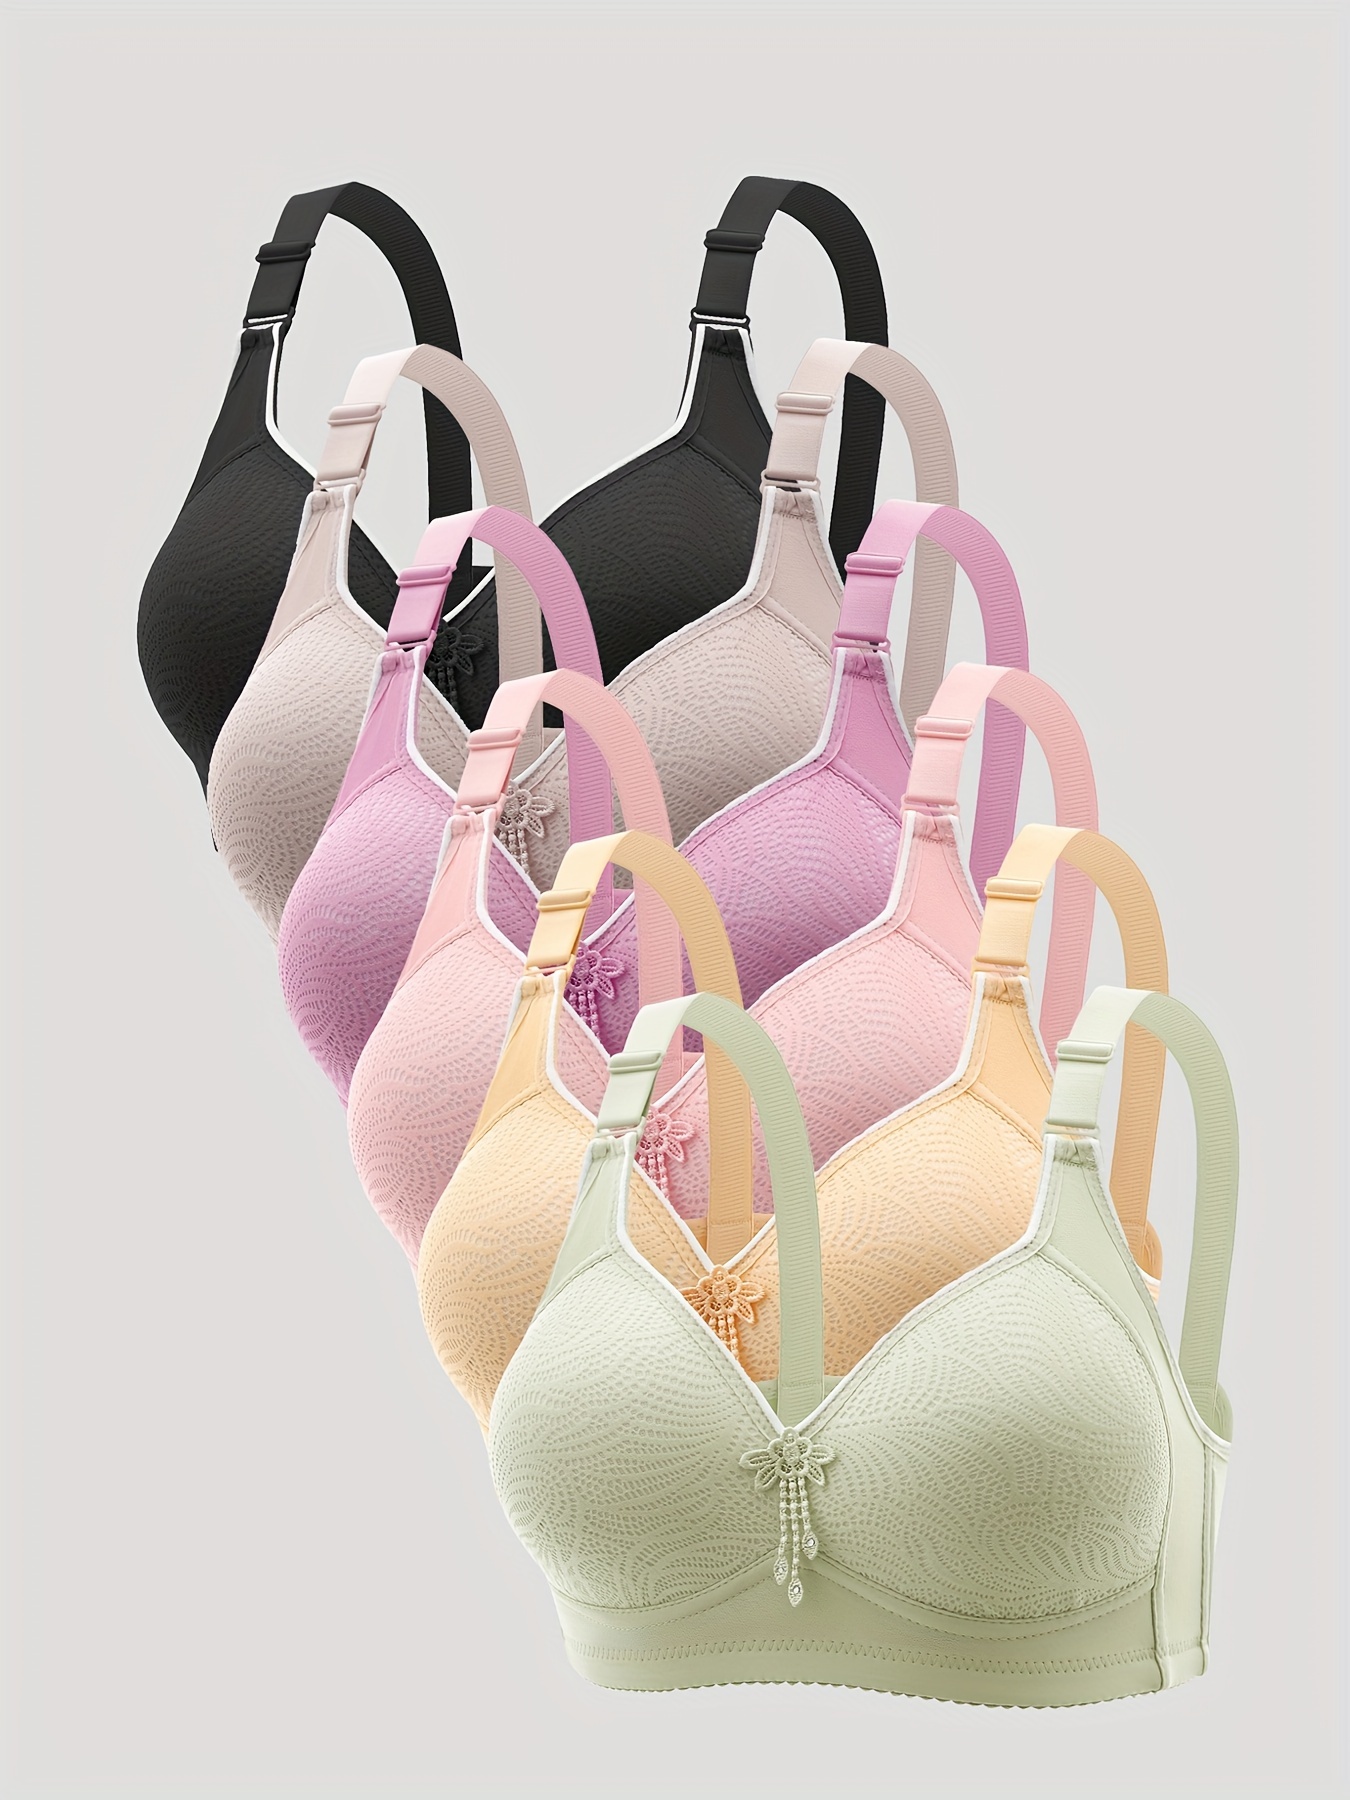 10 creative and unusual bra designs – DesignSwan.com